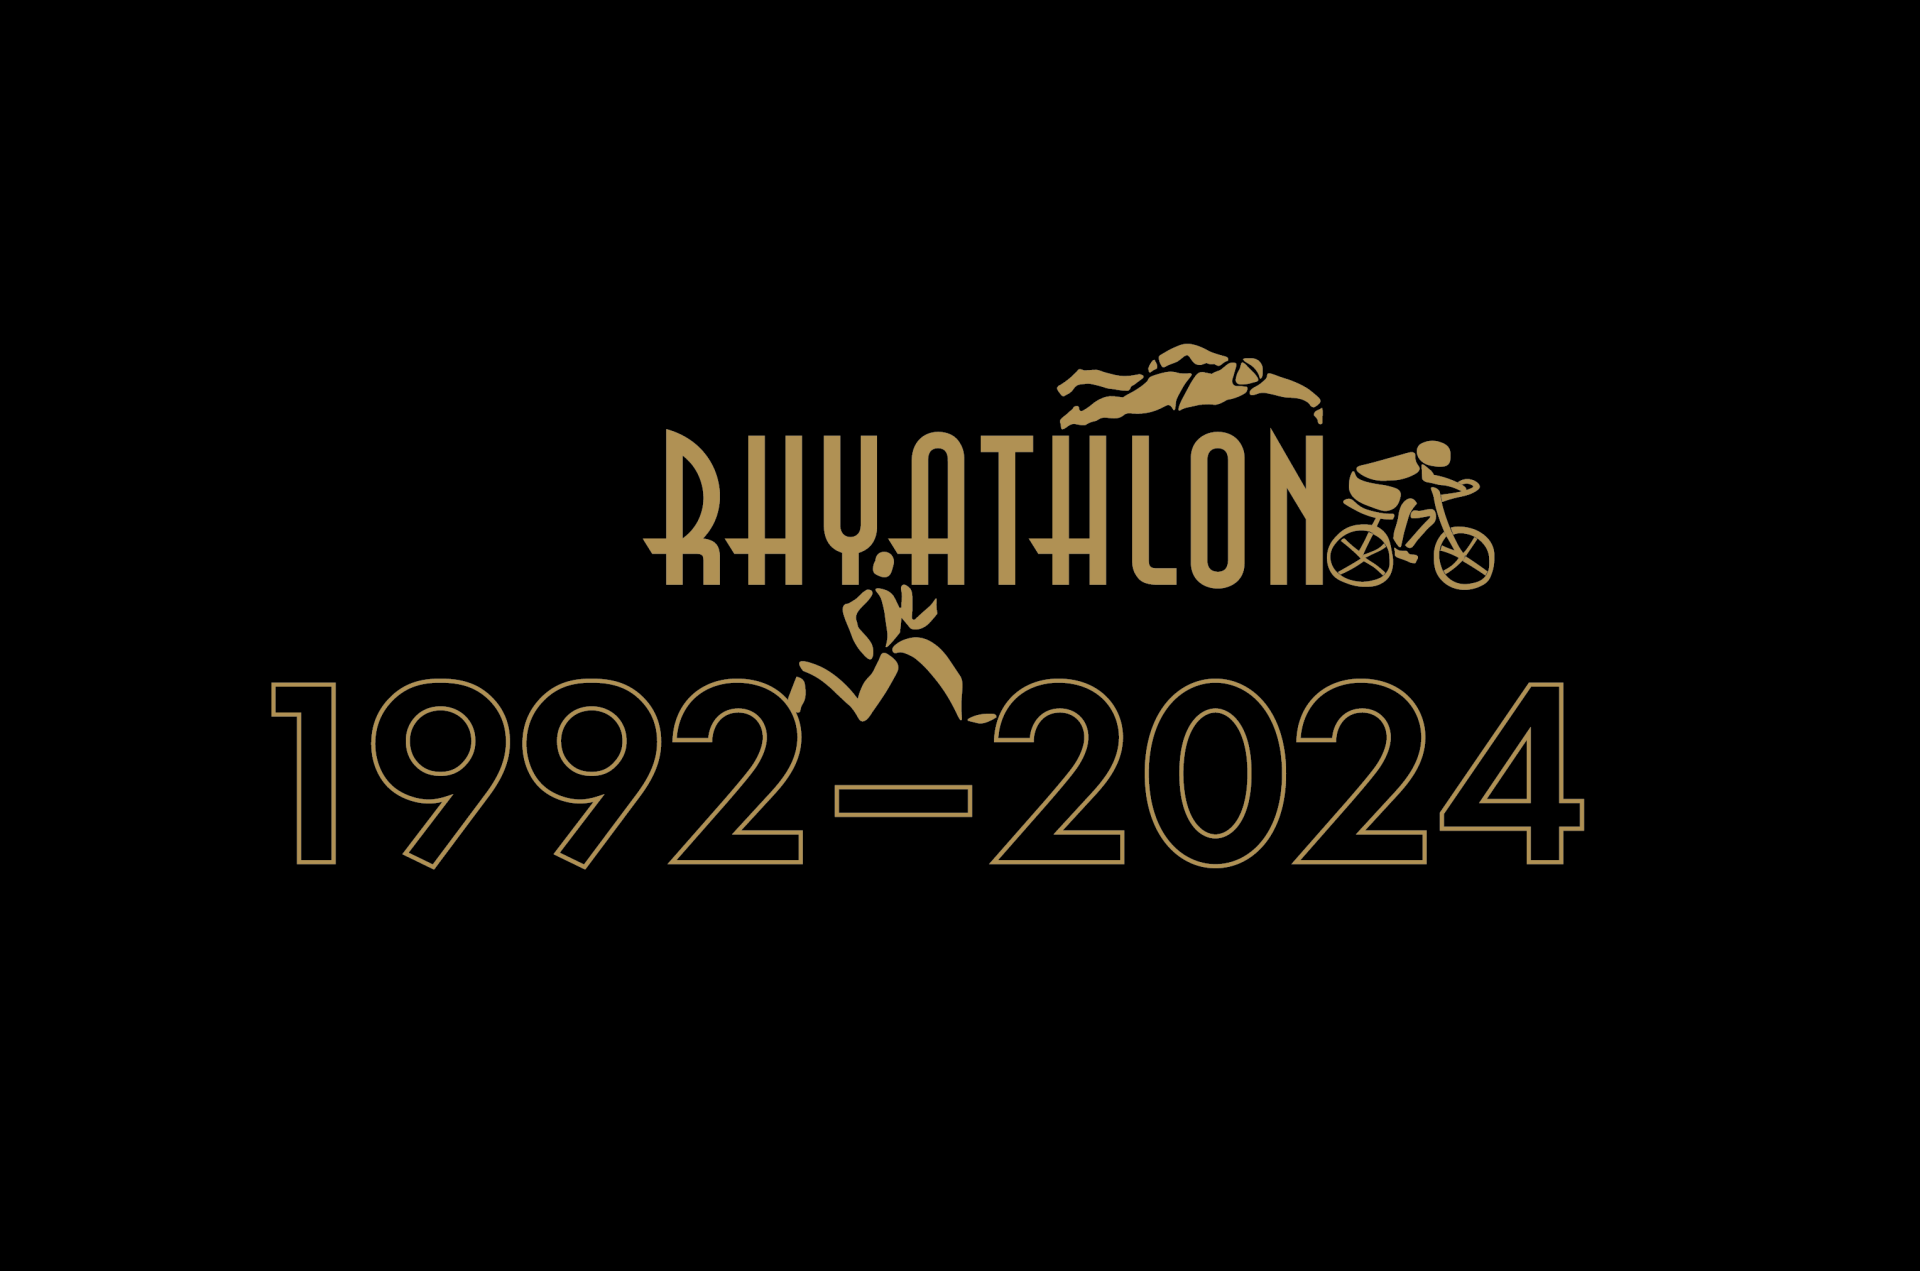 Rhyathlon 2024